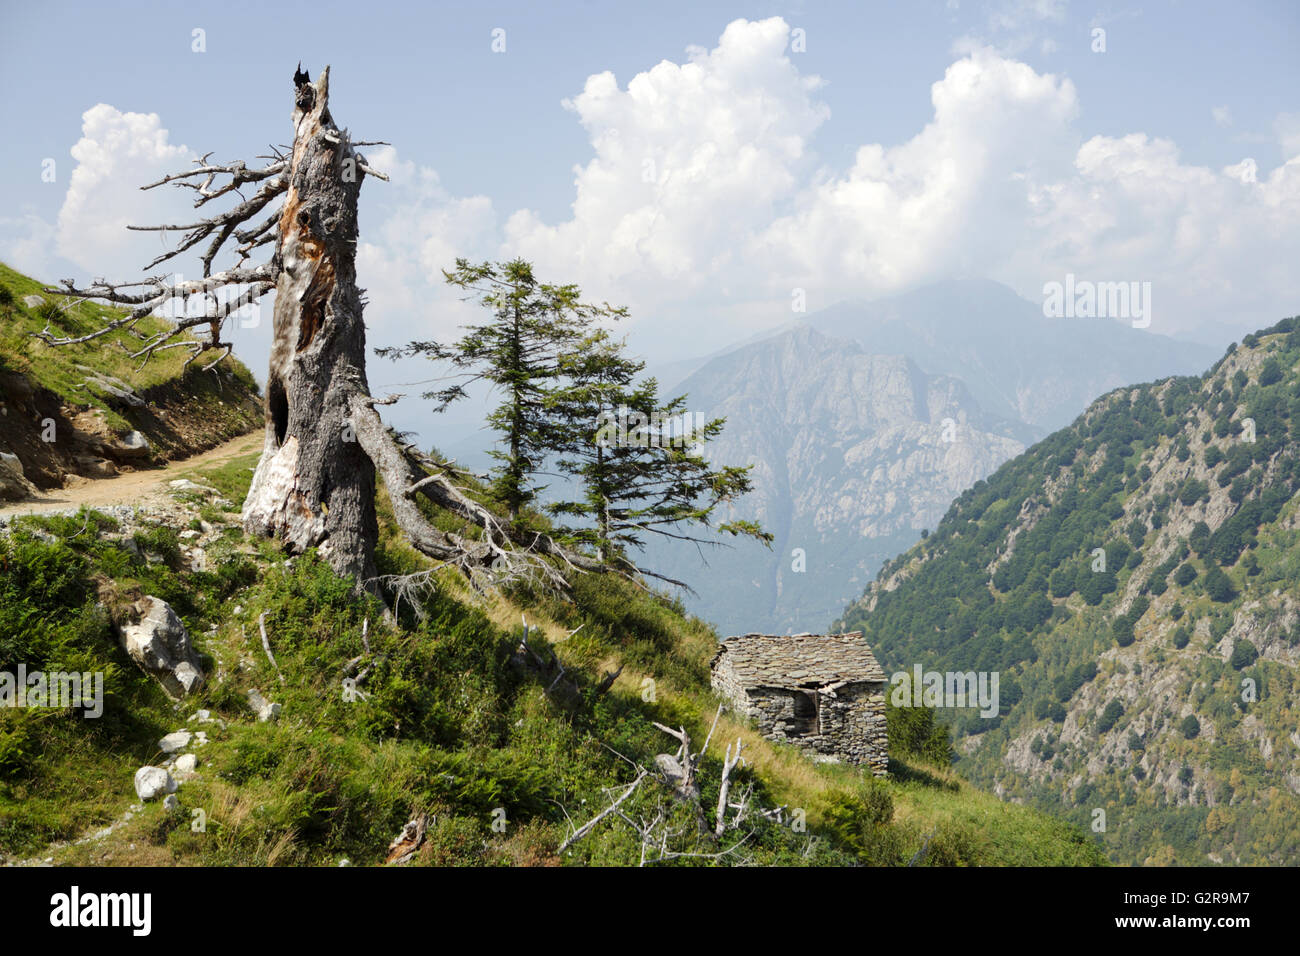 Petite cabane en pierre dans les montagnes, Diga di Moledana, Valle dei Ratti, Val dei Ratti, Lombardie, Italie Banque D'Images